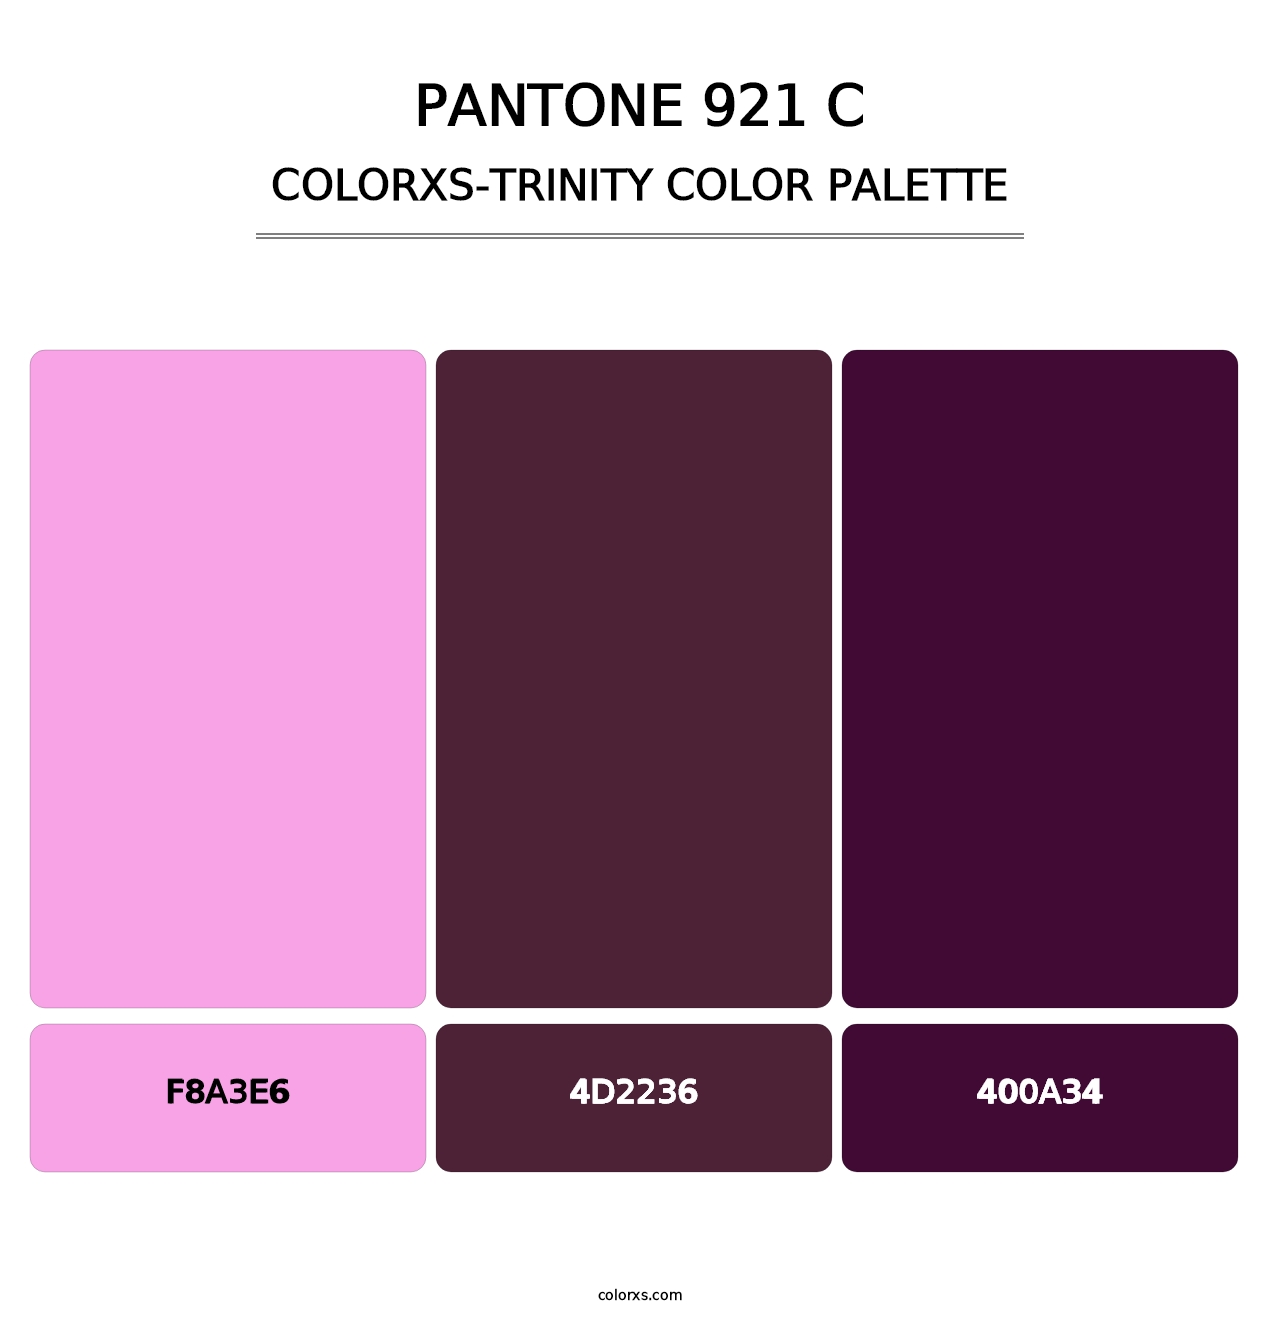 PANTONE 921 C - Colorxs Trinity Palette